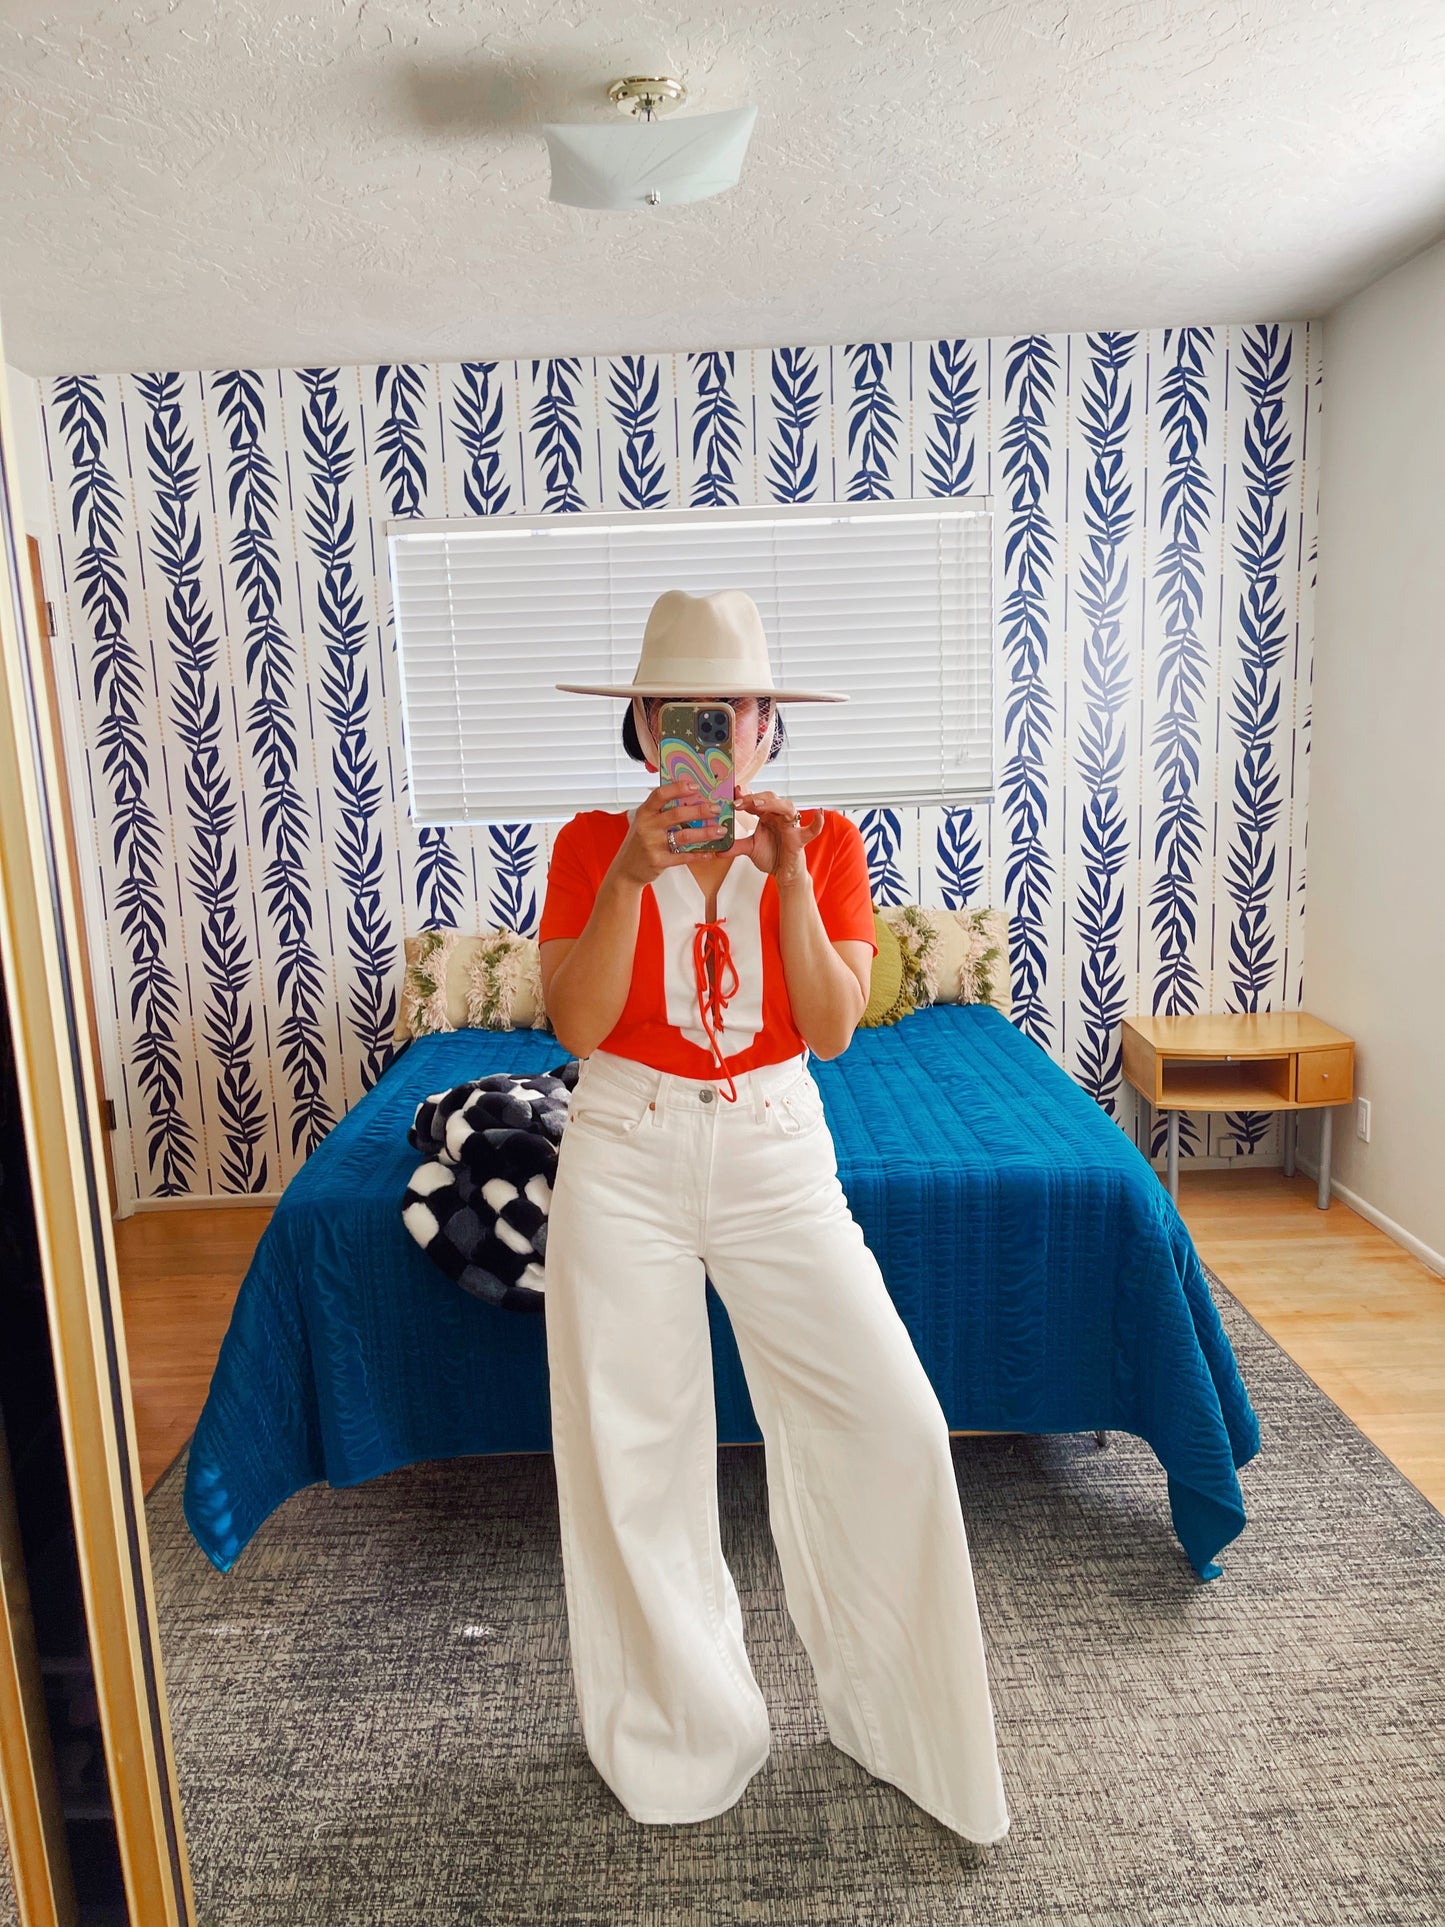 Vintage 60s / 70s Neon Orange & White Stretchy Crisscrossed Front Bodysuit Fits Sizes S-L